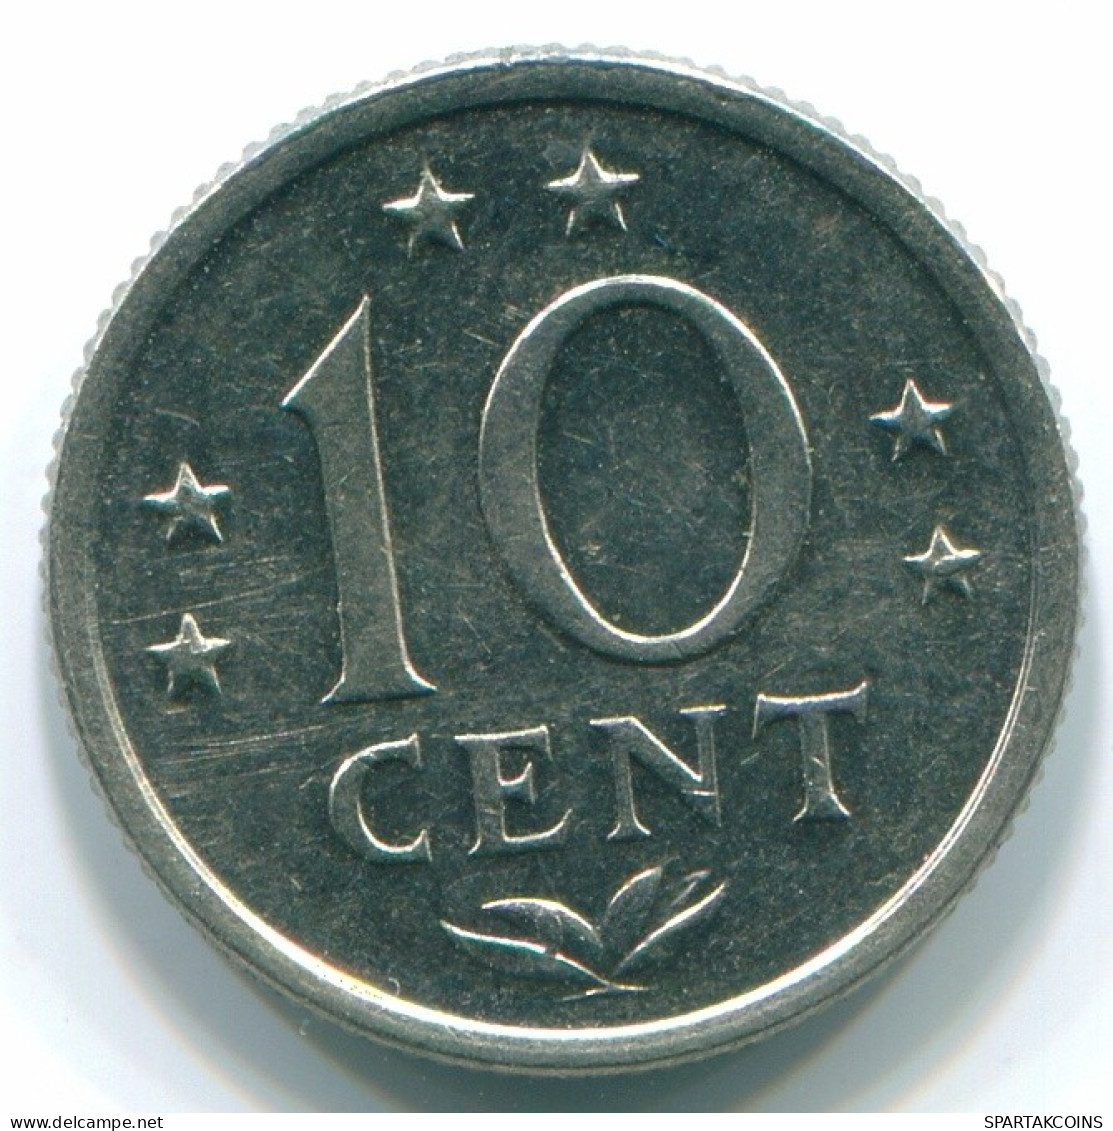 10 CENTS 1971 NETHERLANDS ANTILLES Nickel Colonial Coin #S13411.U.A - Antilles Néerlandaises